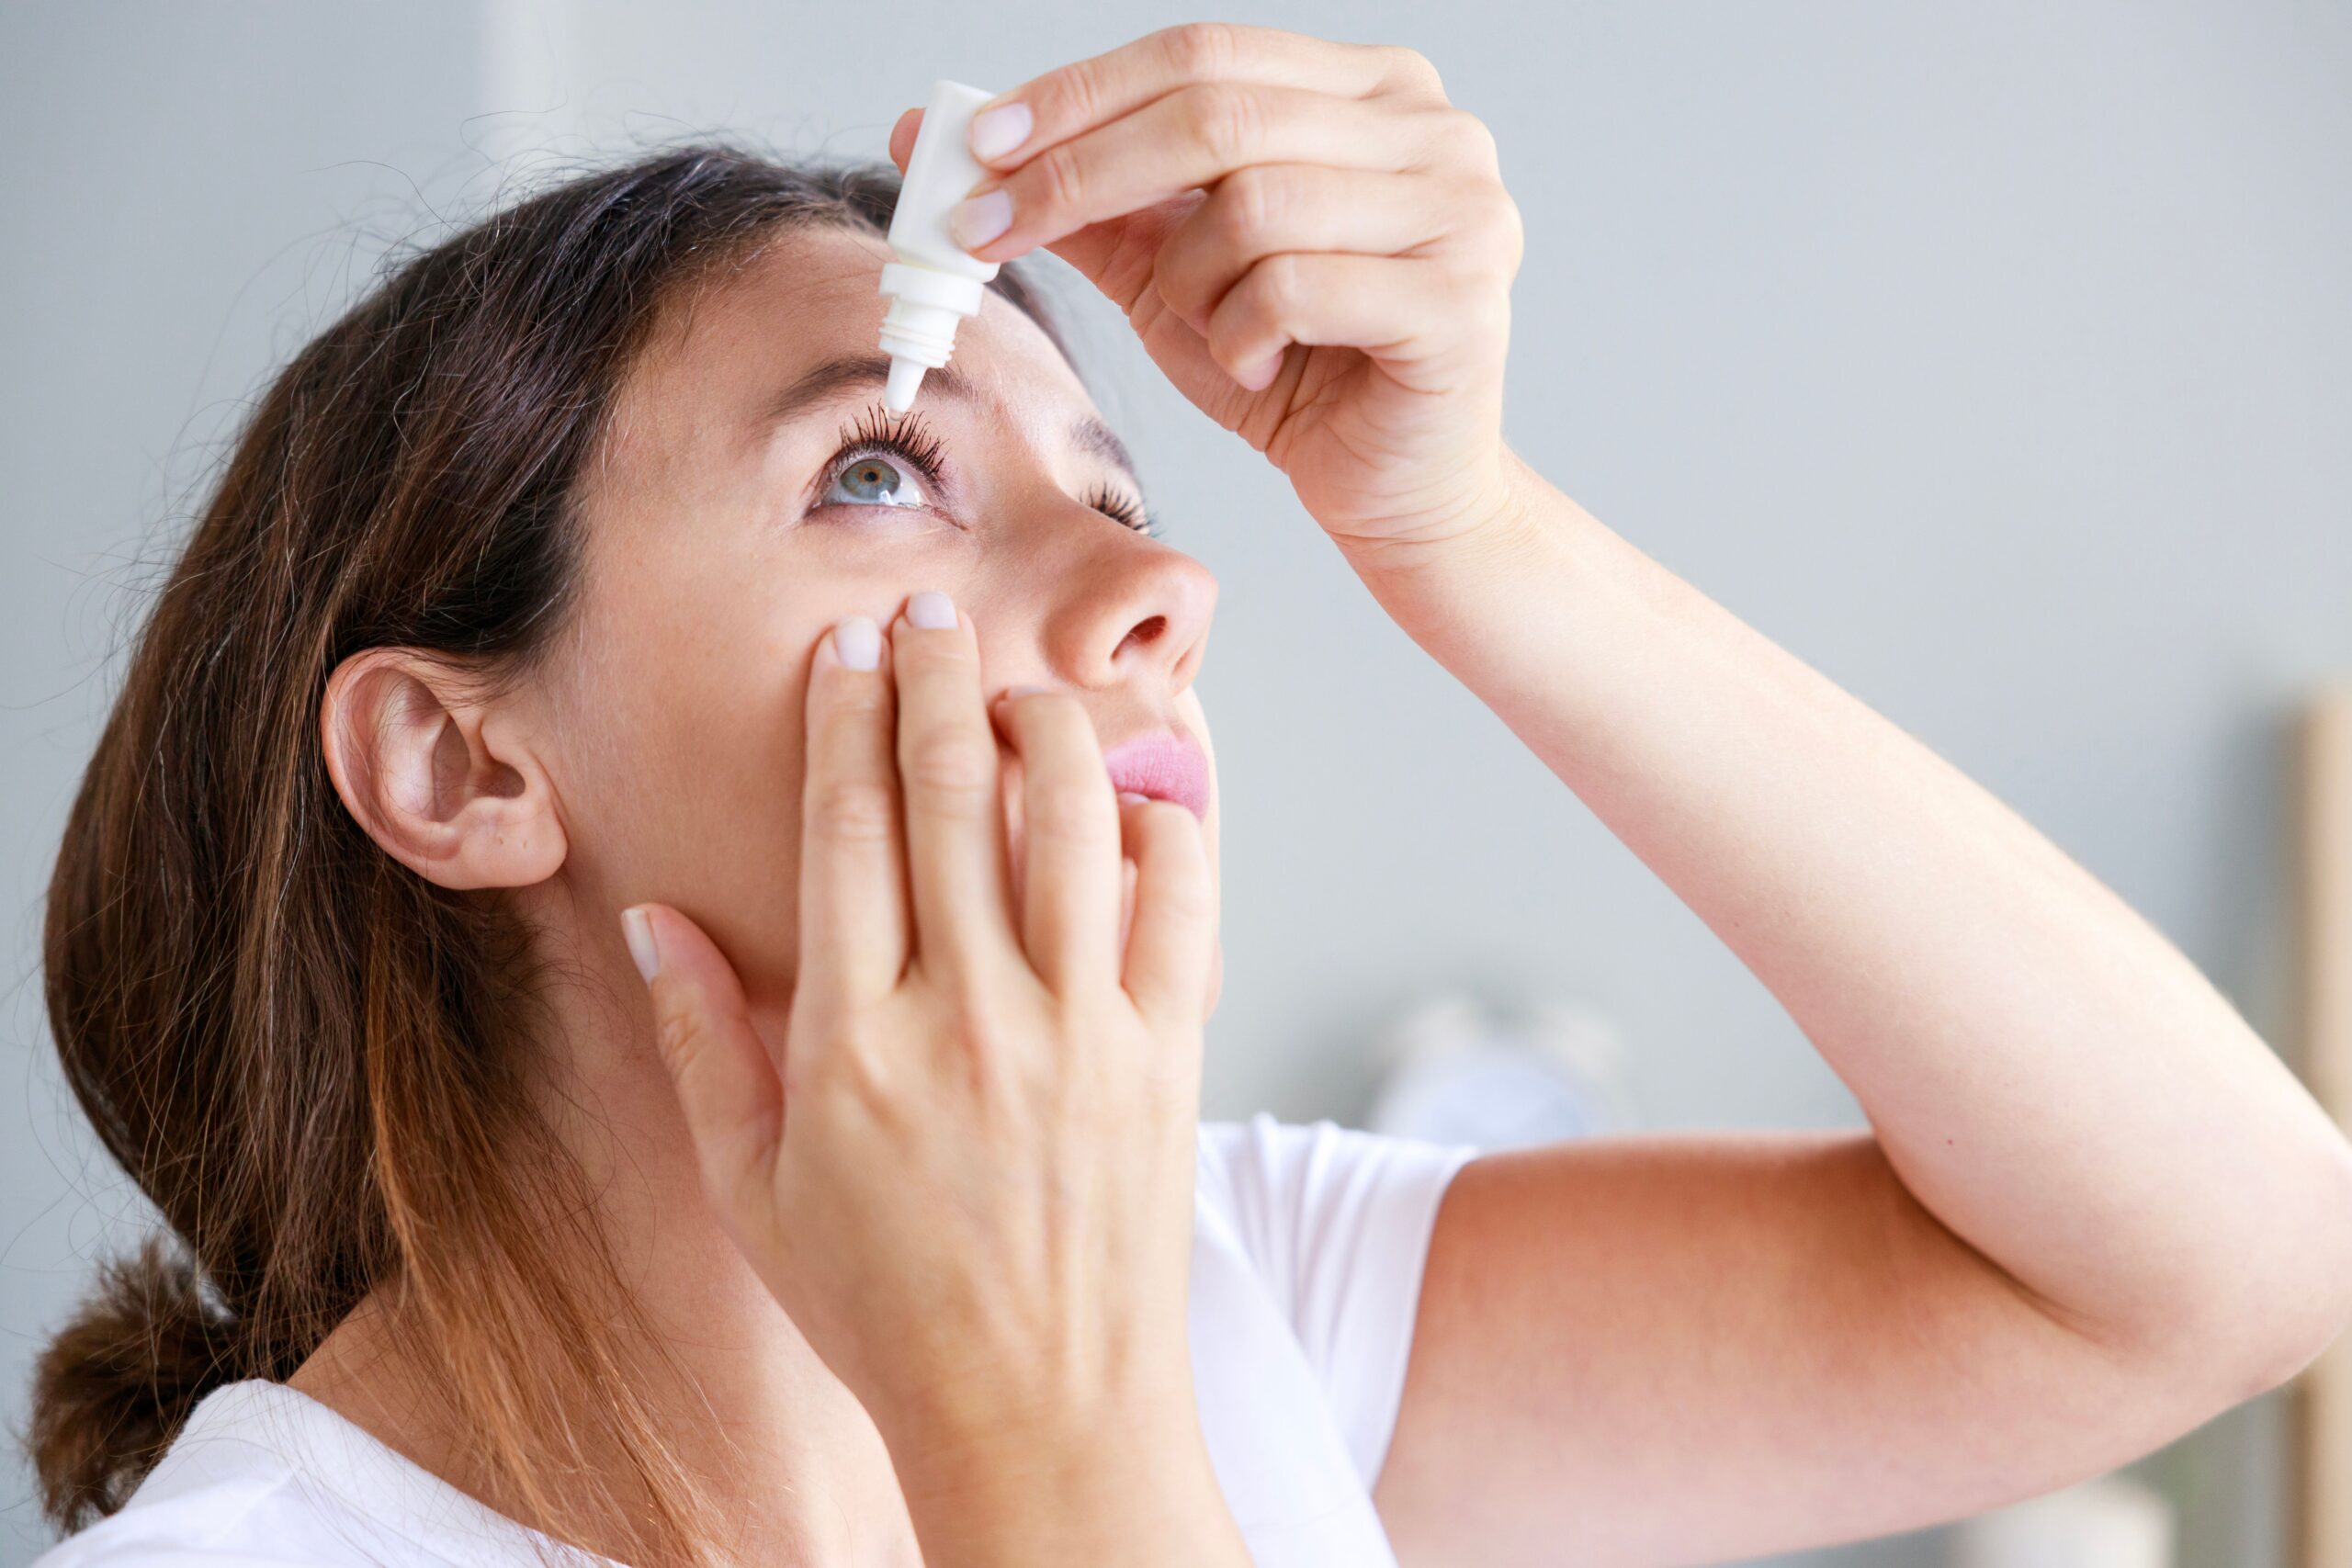 FDA Approves Pilocarpine Hydrochloride Ophthalmic Solution to Treat Presbyopia